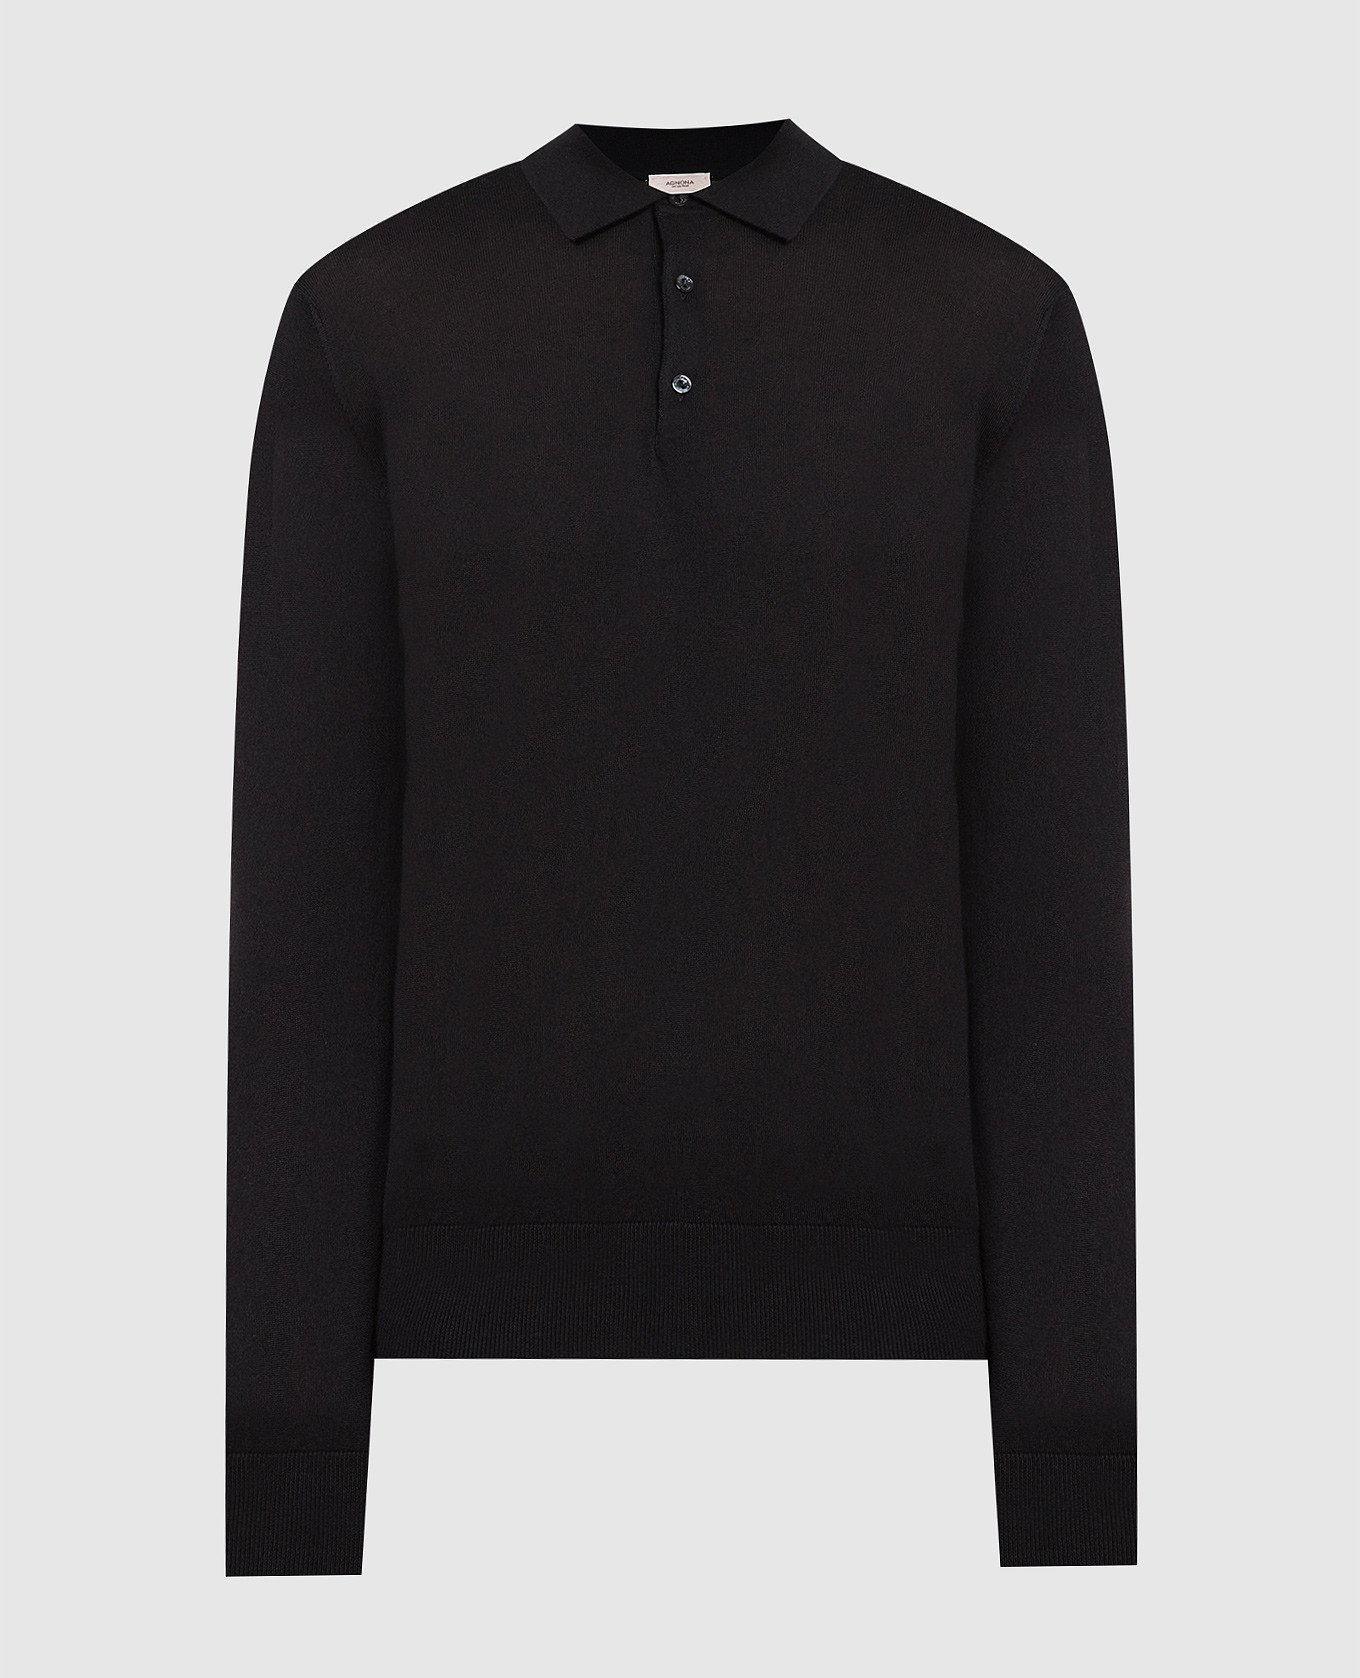 Black cashmere and silk polo shirt